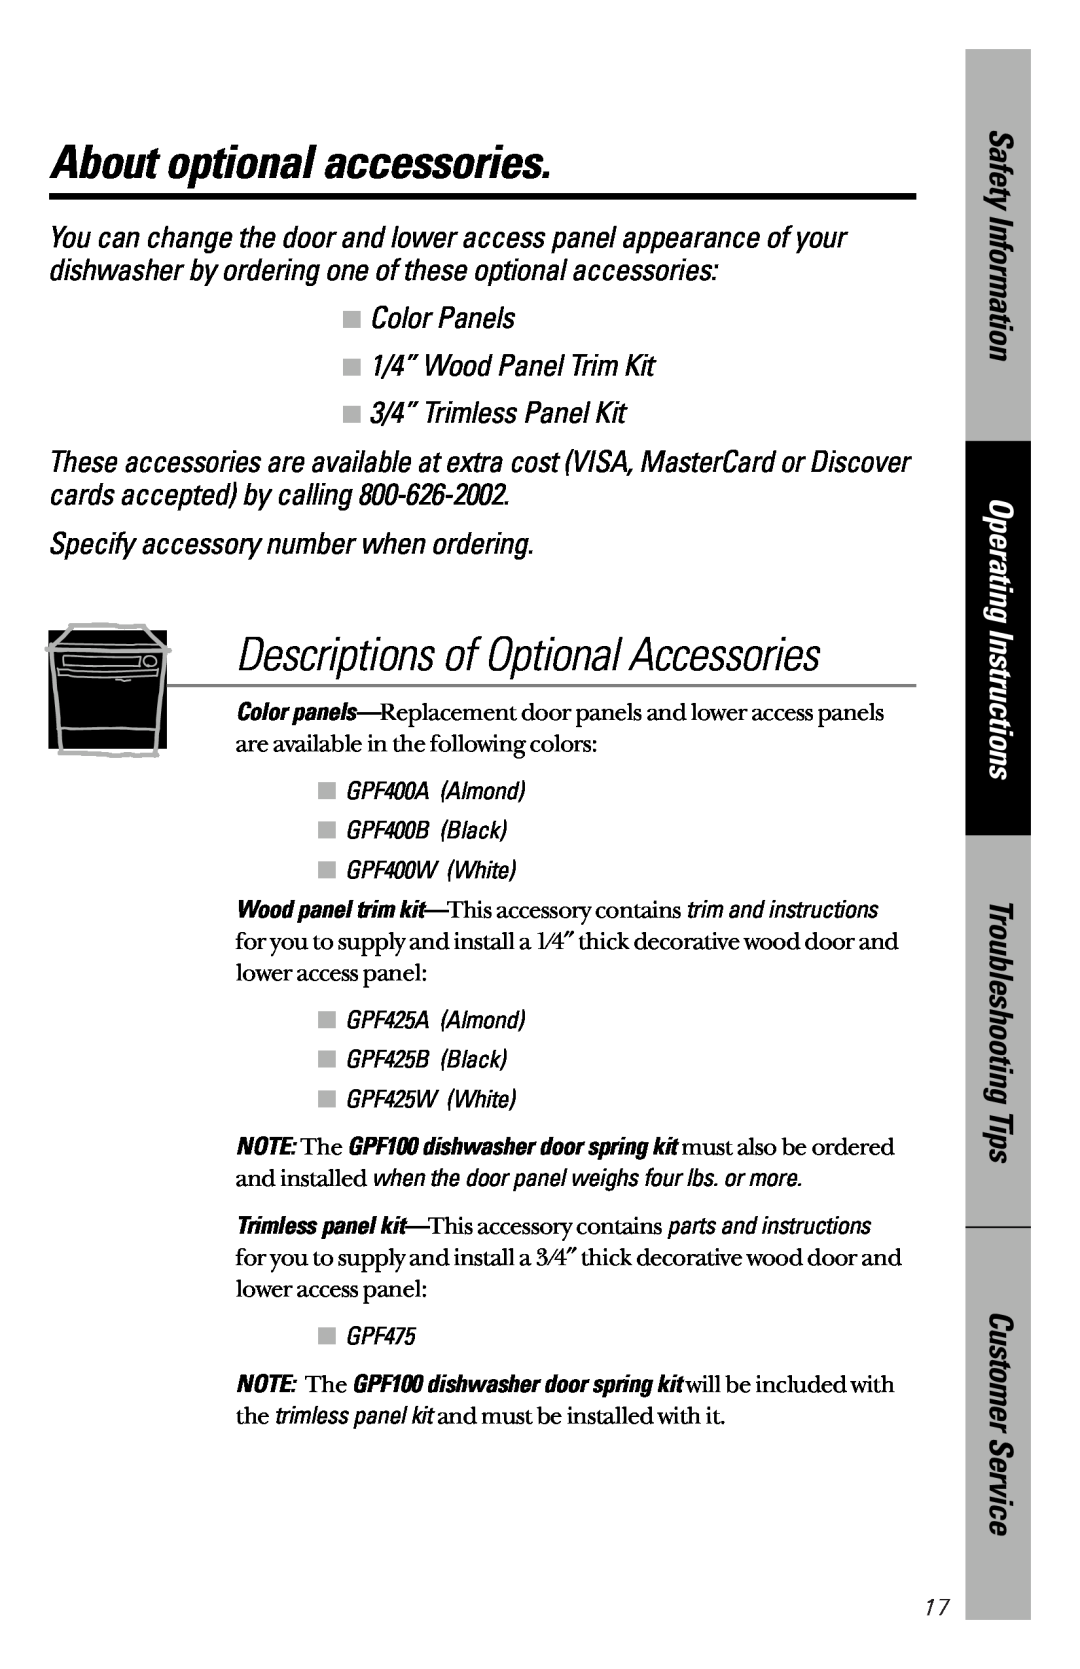 GE 165D4700P227 About optional accessories, Descriptions of Optional Accessories, Specify accessory number when ordering 